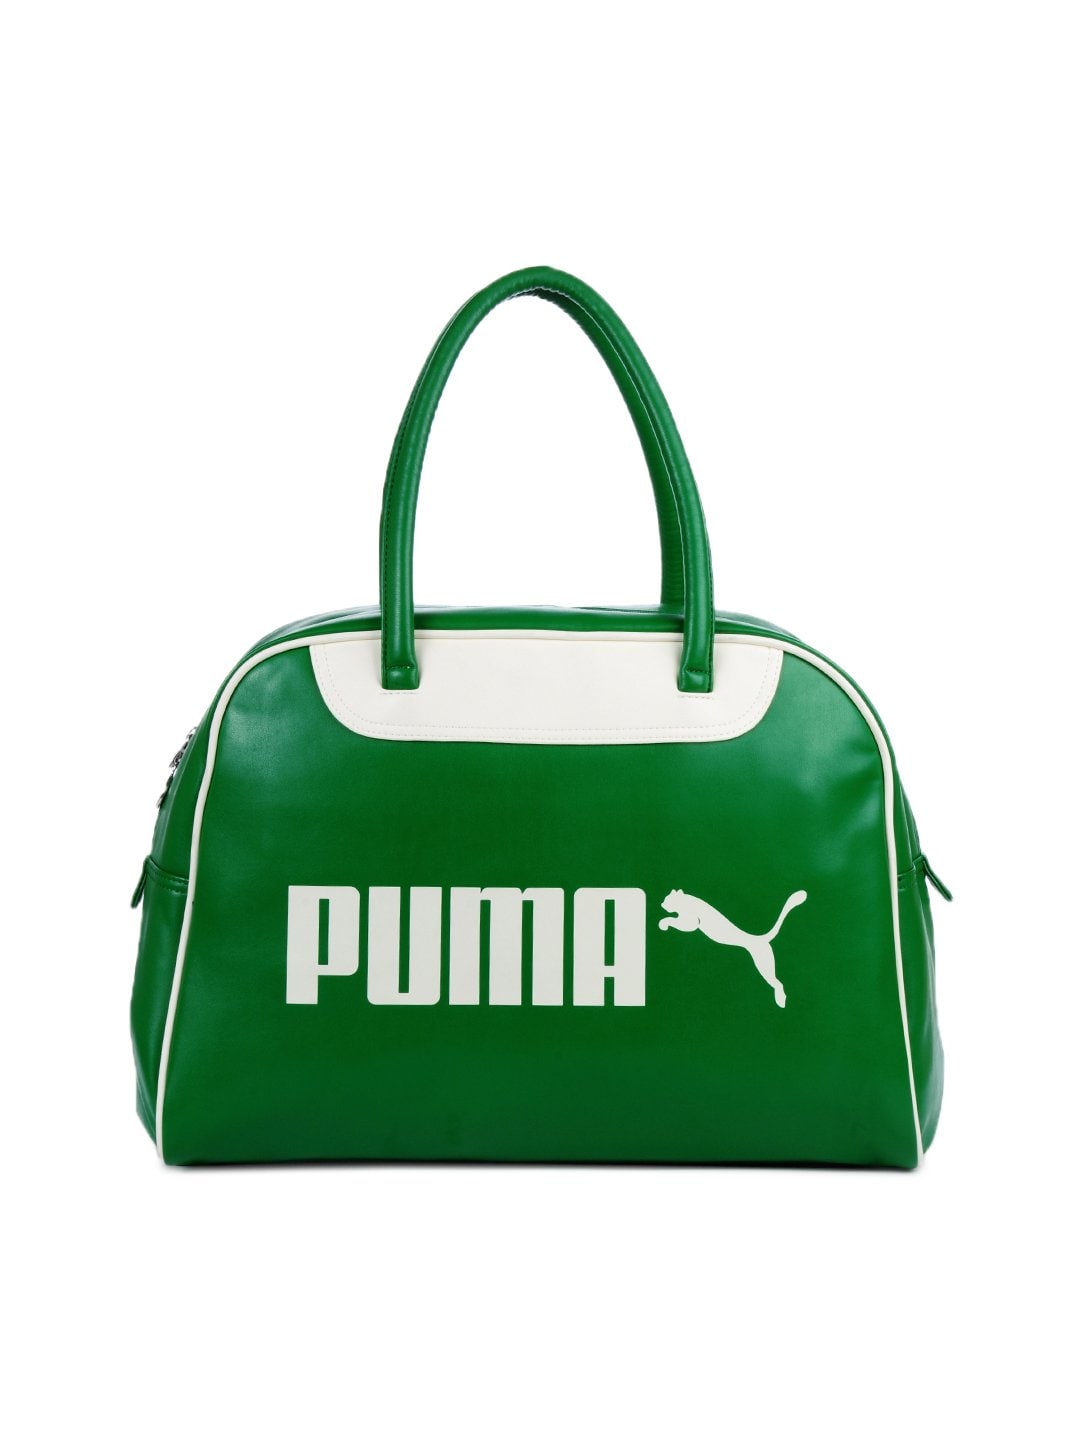 Puma Women Campus Grip Green Duffle Bag